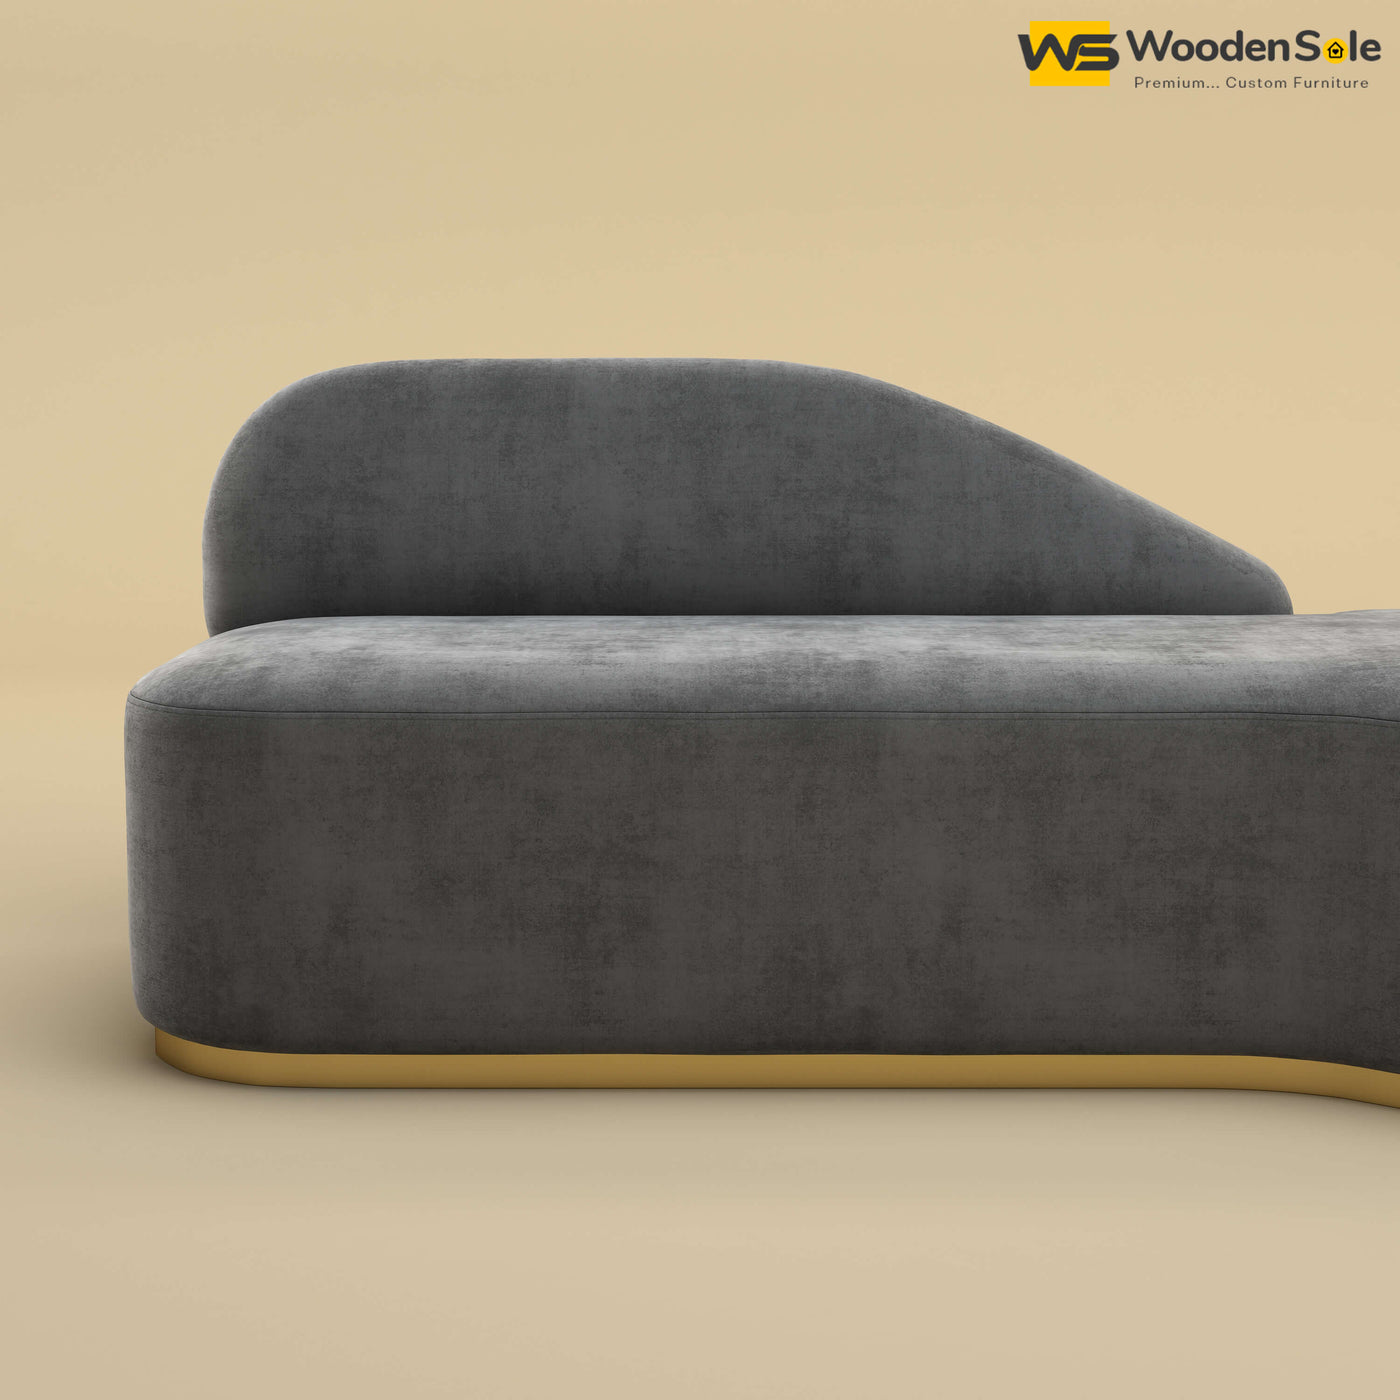 Pablo Premium Design Couch Sofa (Velvet, Charcoal Gray)